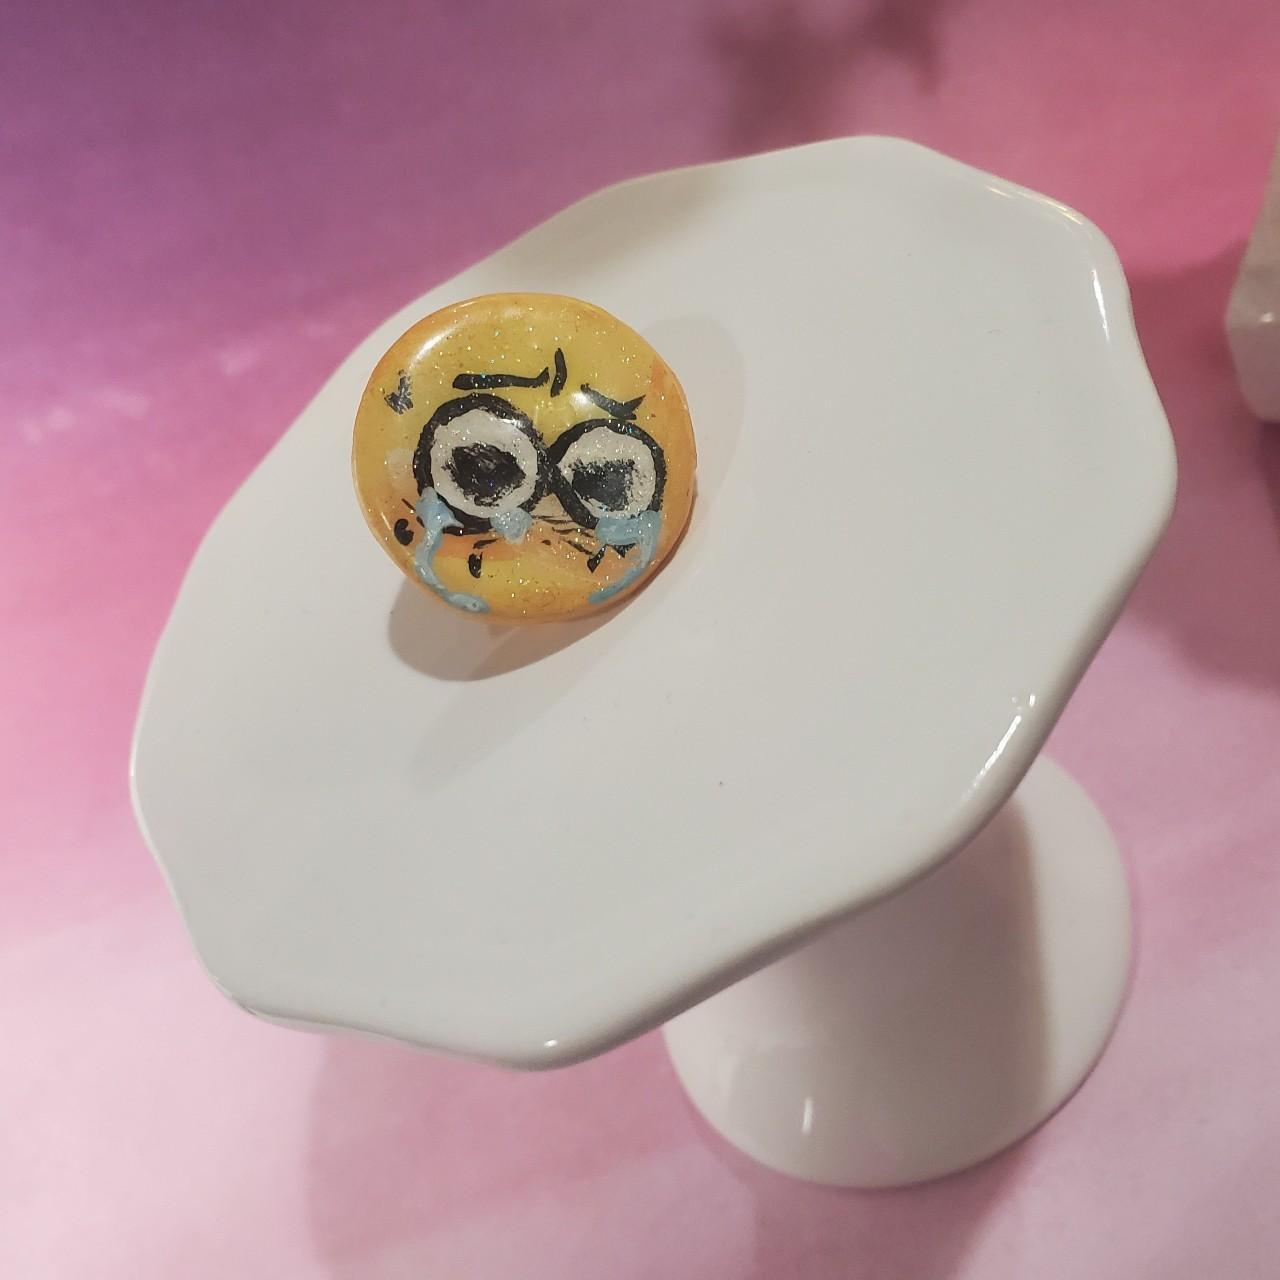 Handmade Crying Cursed Emoji Clay Pin This pin is - Depop